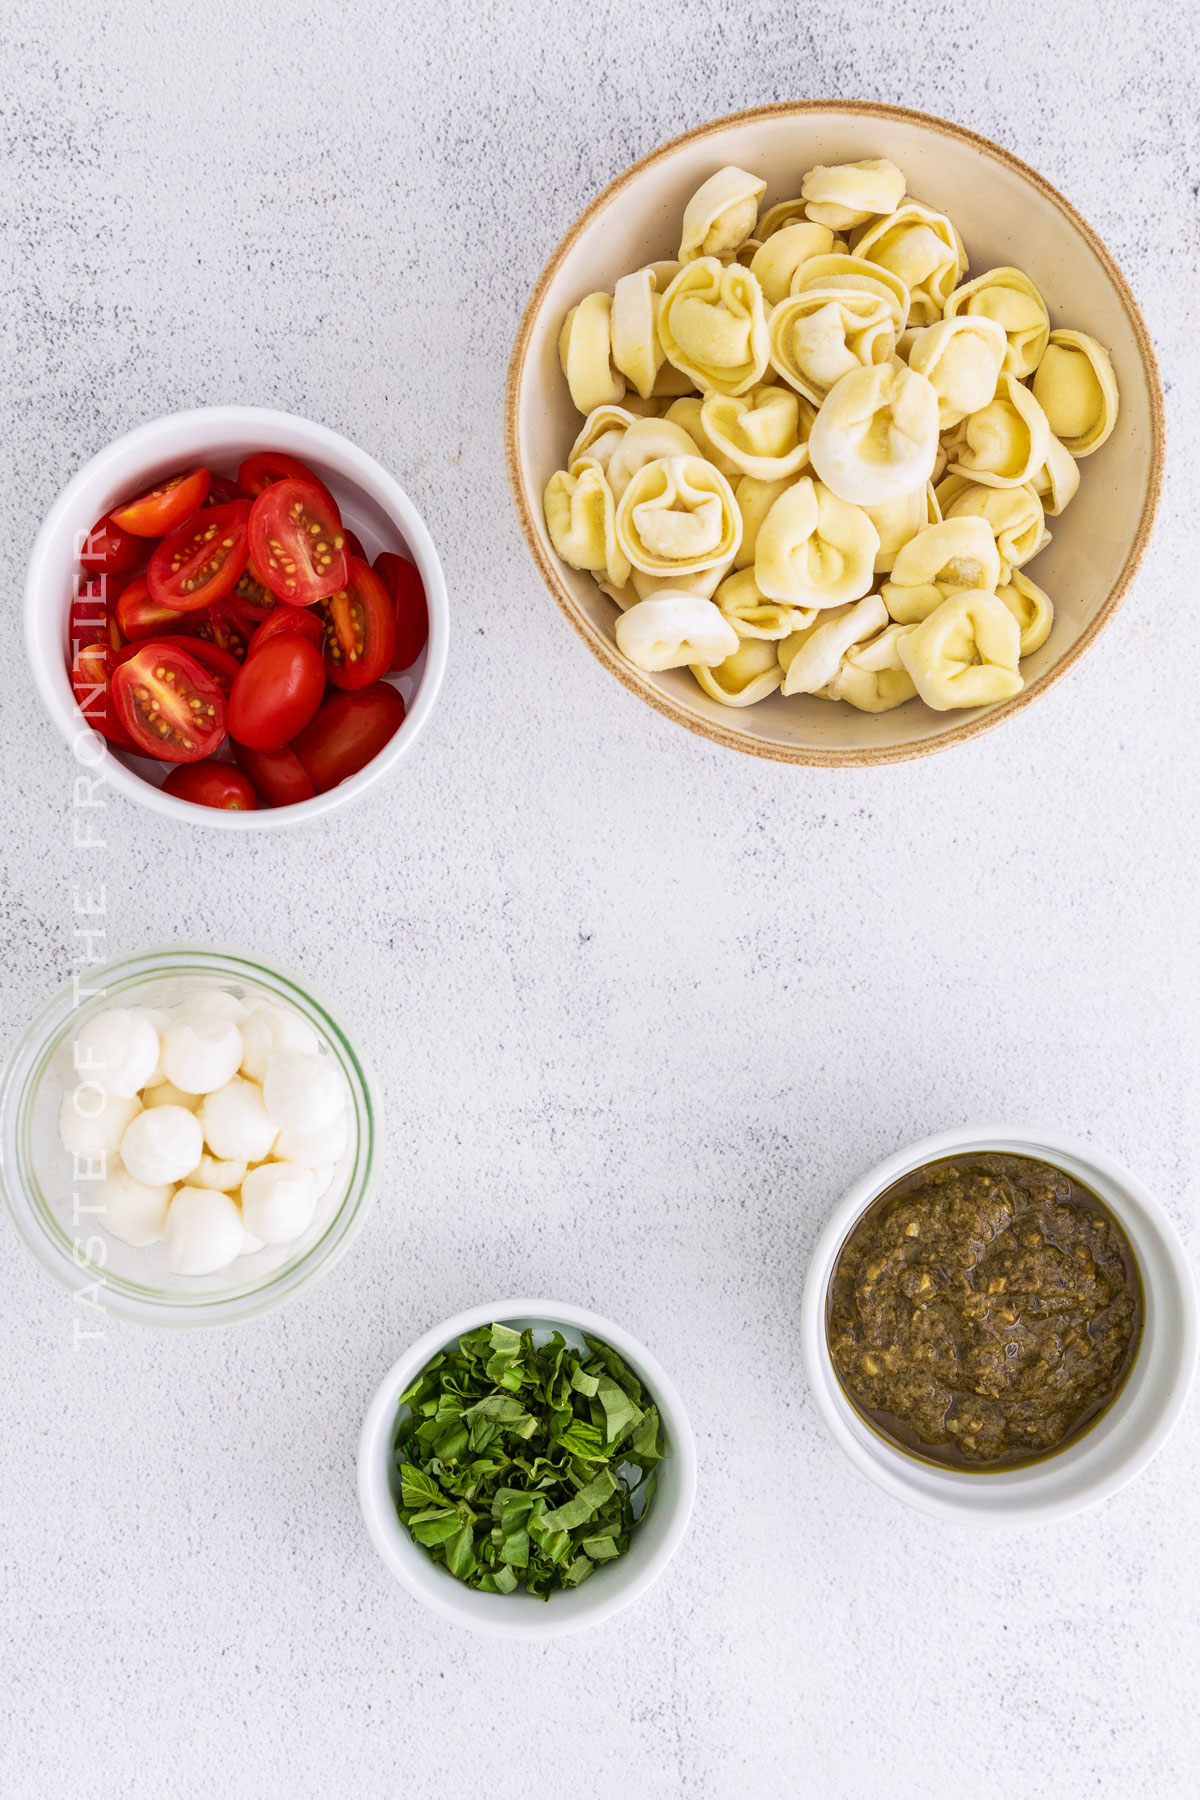 Pesto with Tortellini ingredients